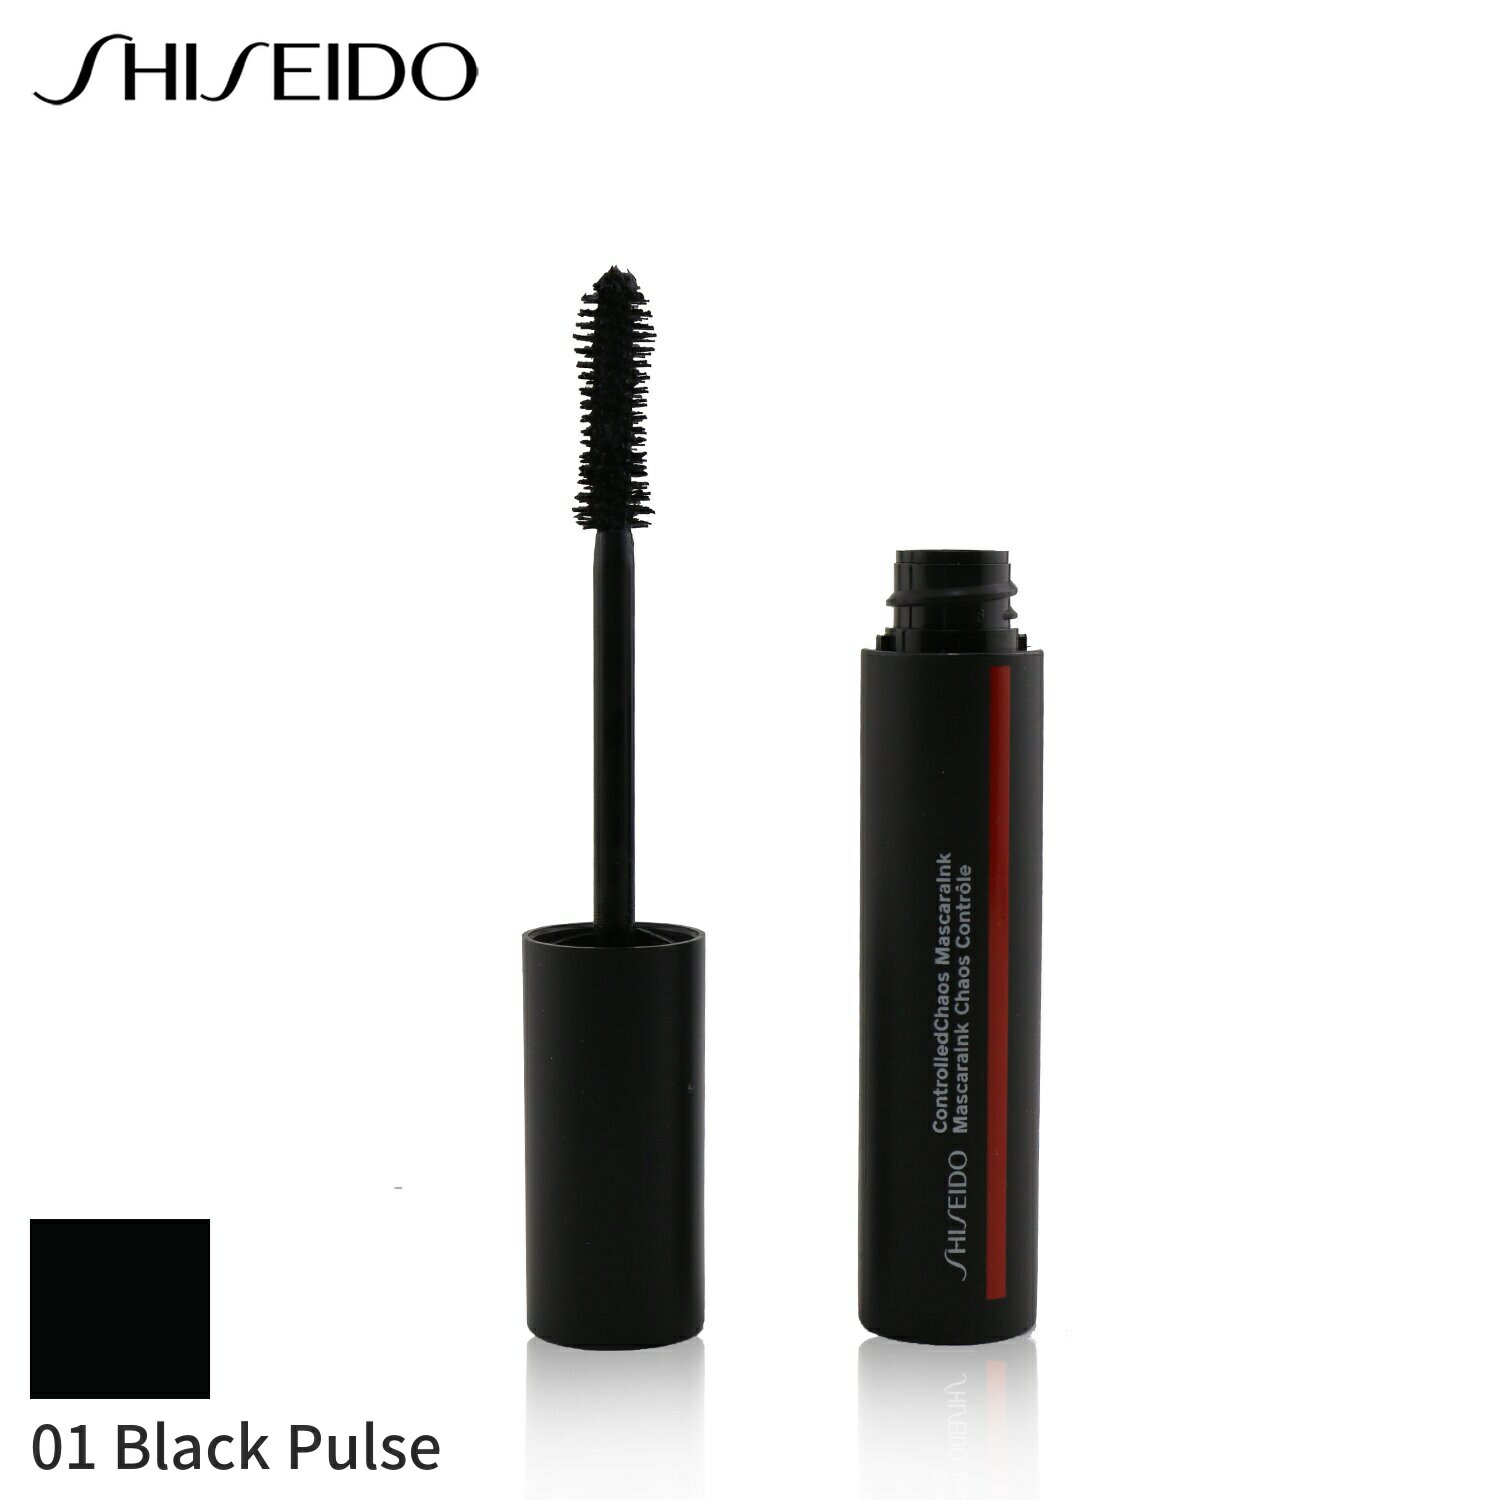  }XJ Shiseido Rg[JIX }XJCN - # 01 Black Pulse 11.5ml CNAbv AC ̓ v[g Mtg 2024 lC uh RX